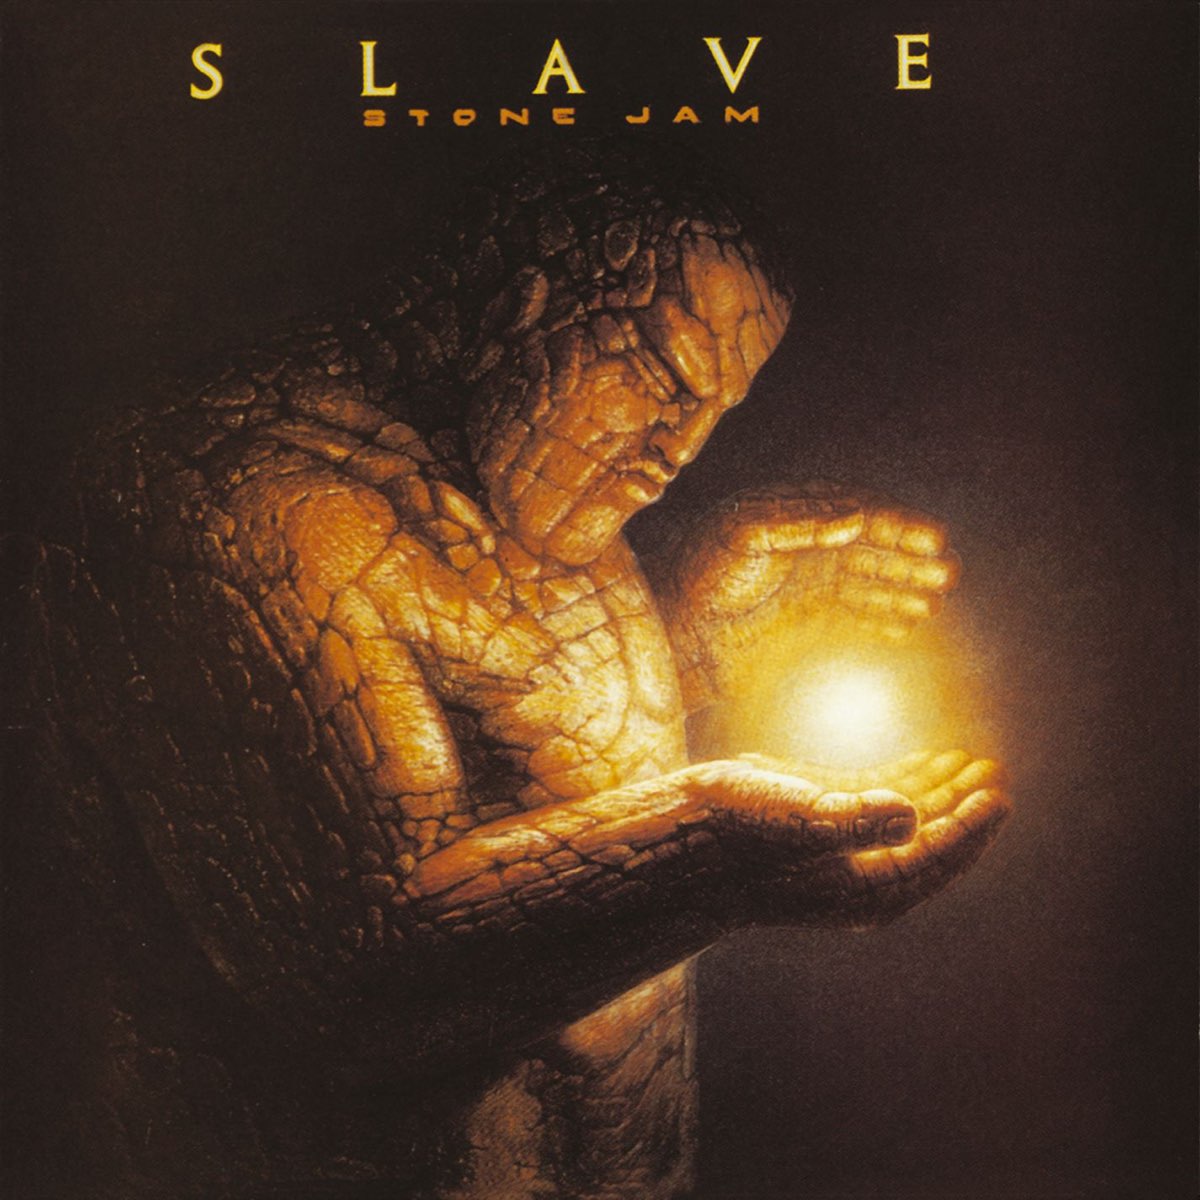 ‎stone Jam Album By Slave Apple Music